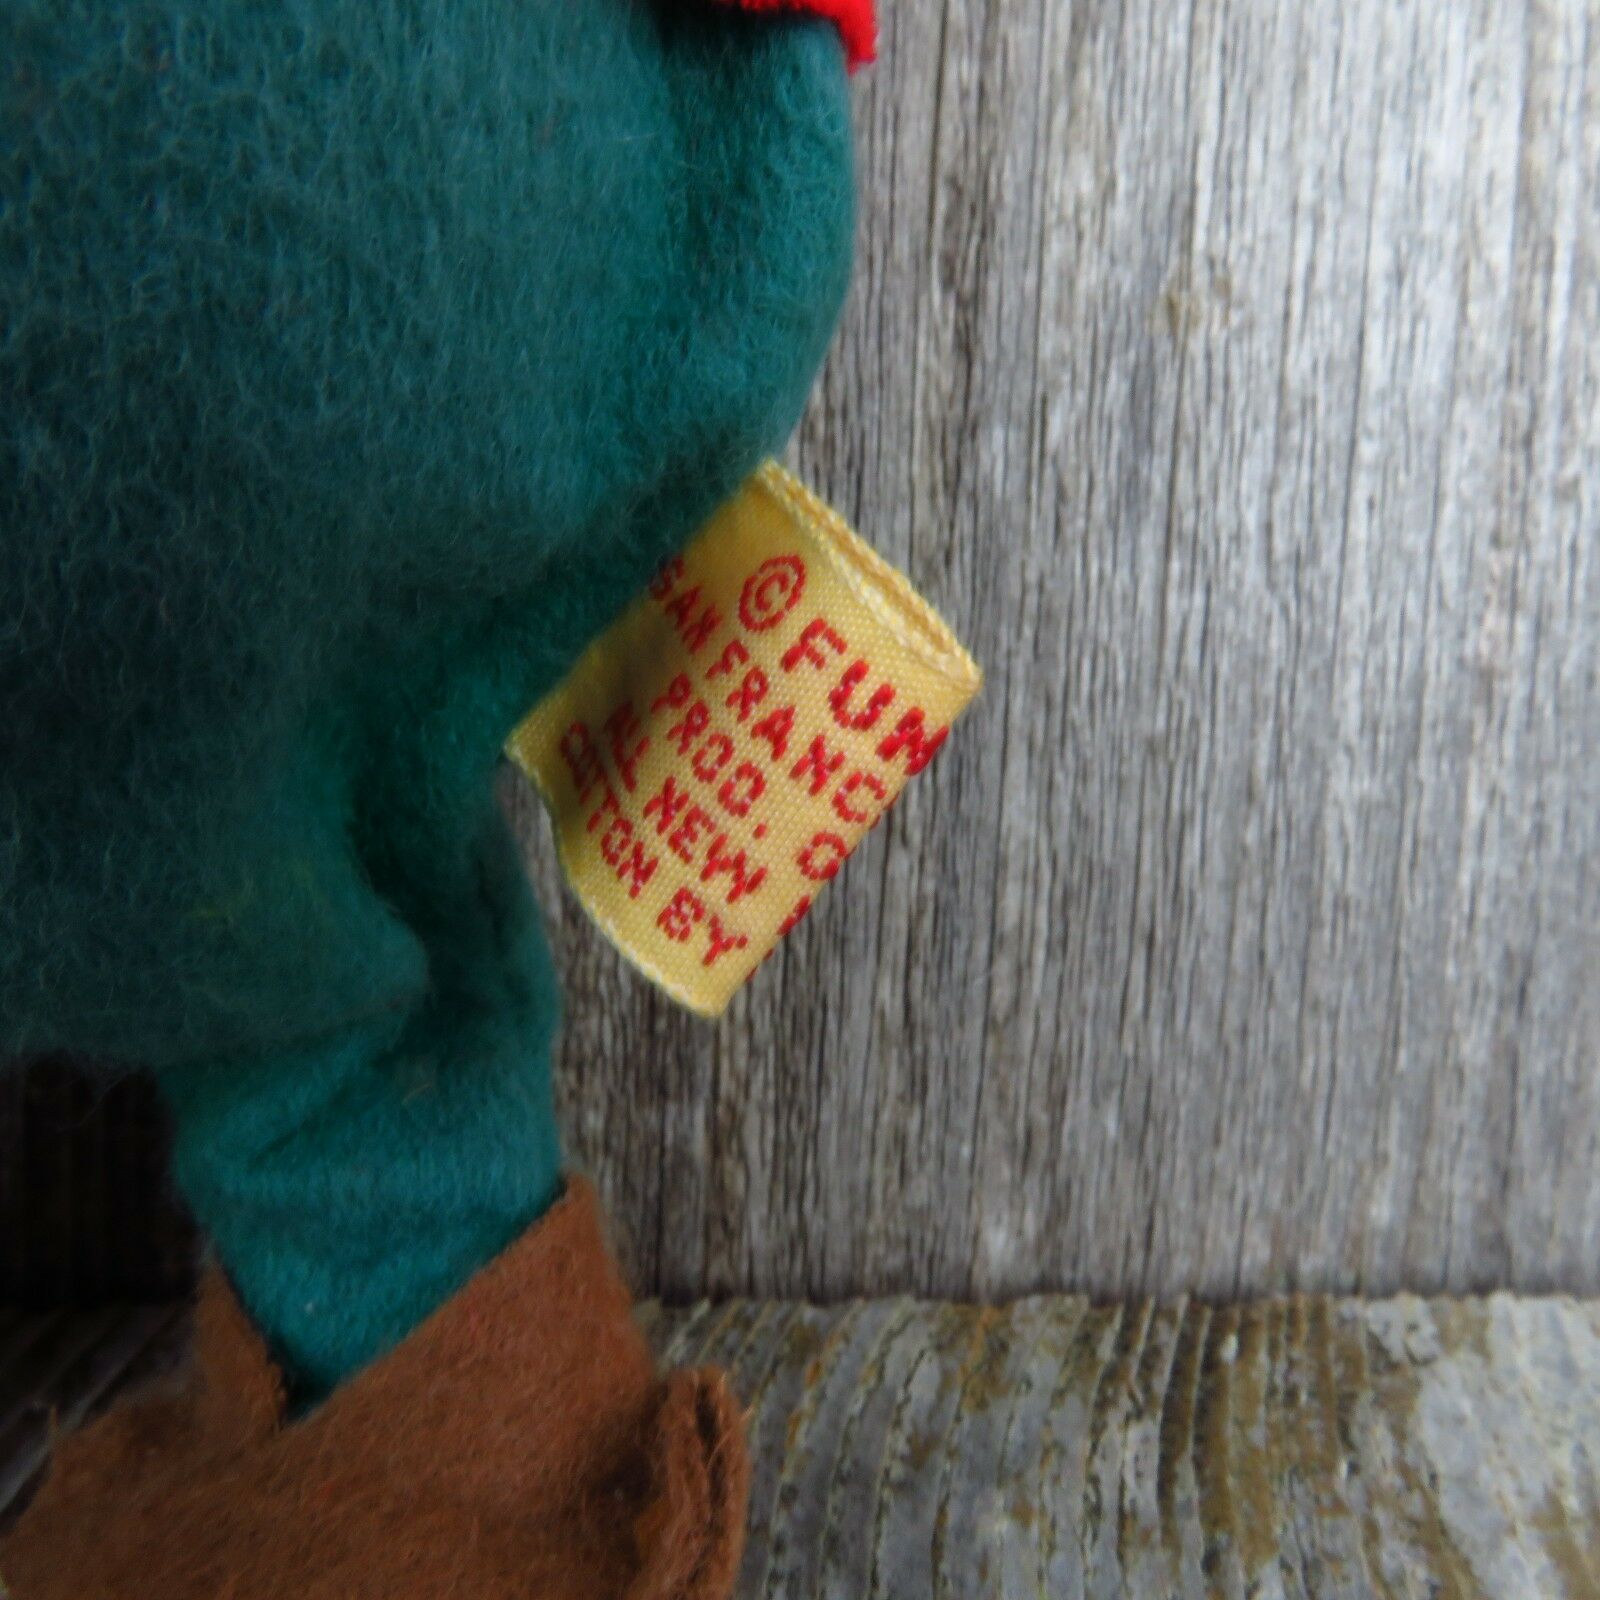 Christmas Elf Ornament Fun Farm Vintage Gnome Plush Stuffed Animal Toy Doll - At Grandma's Table